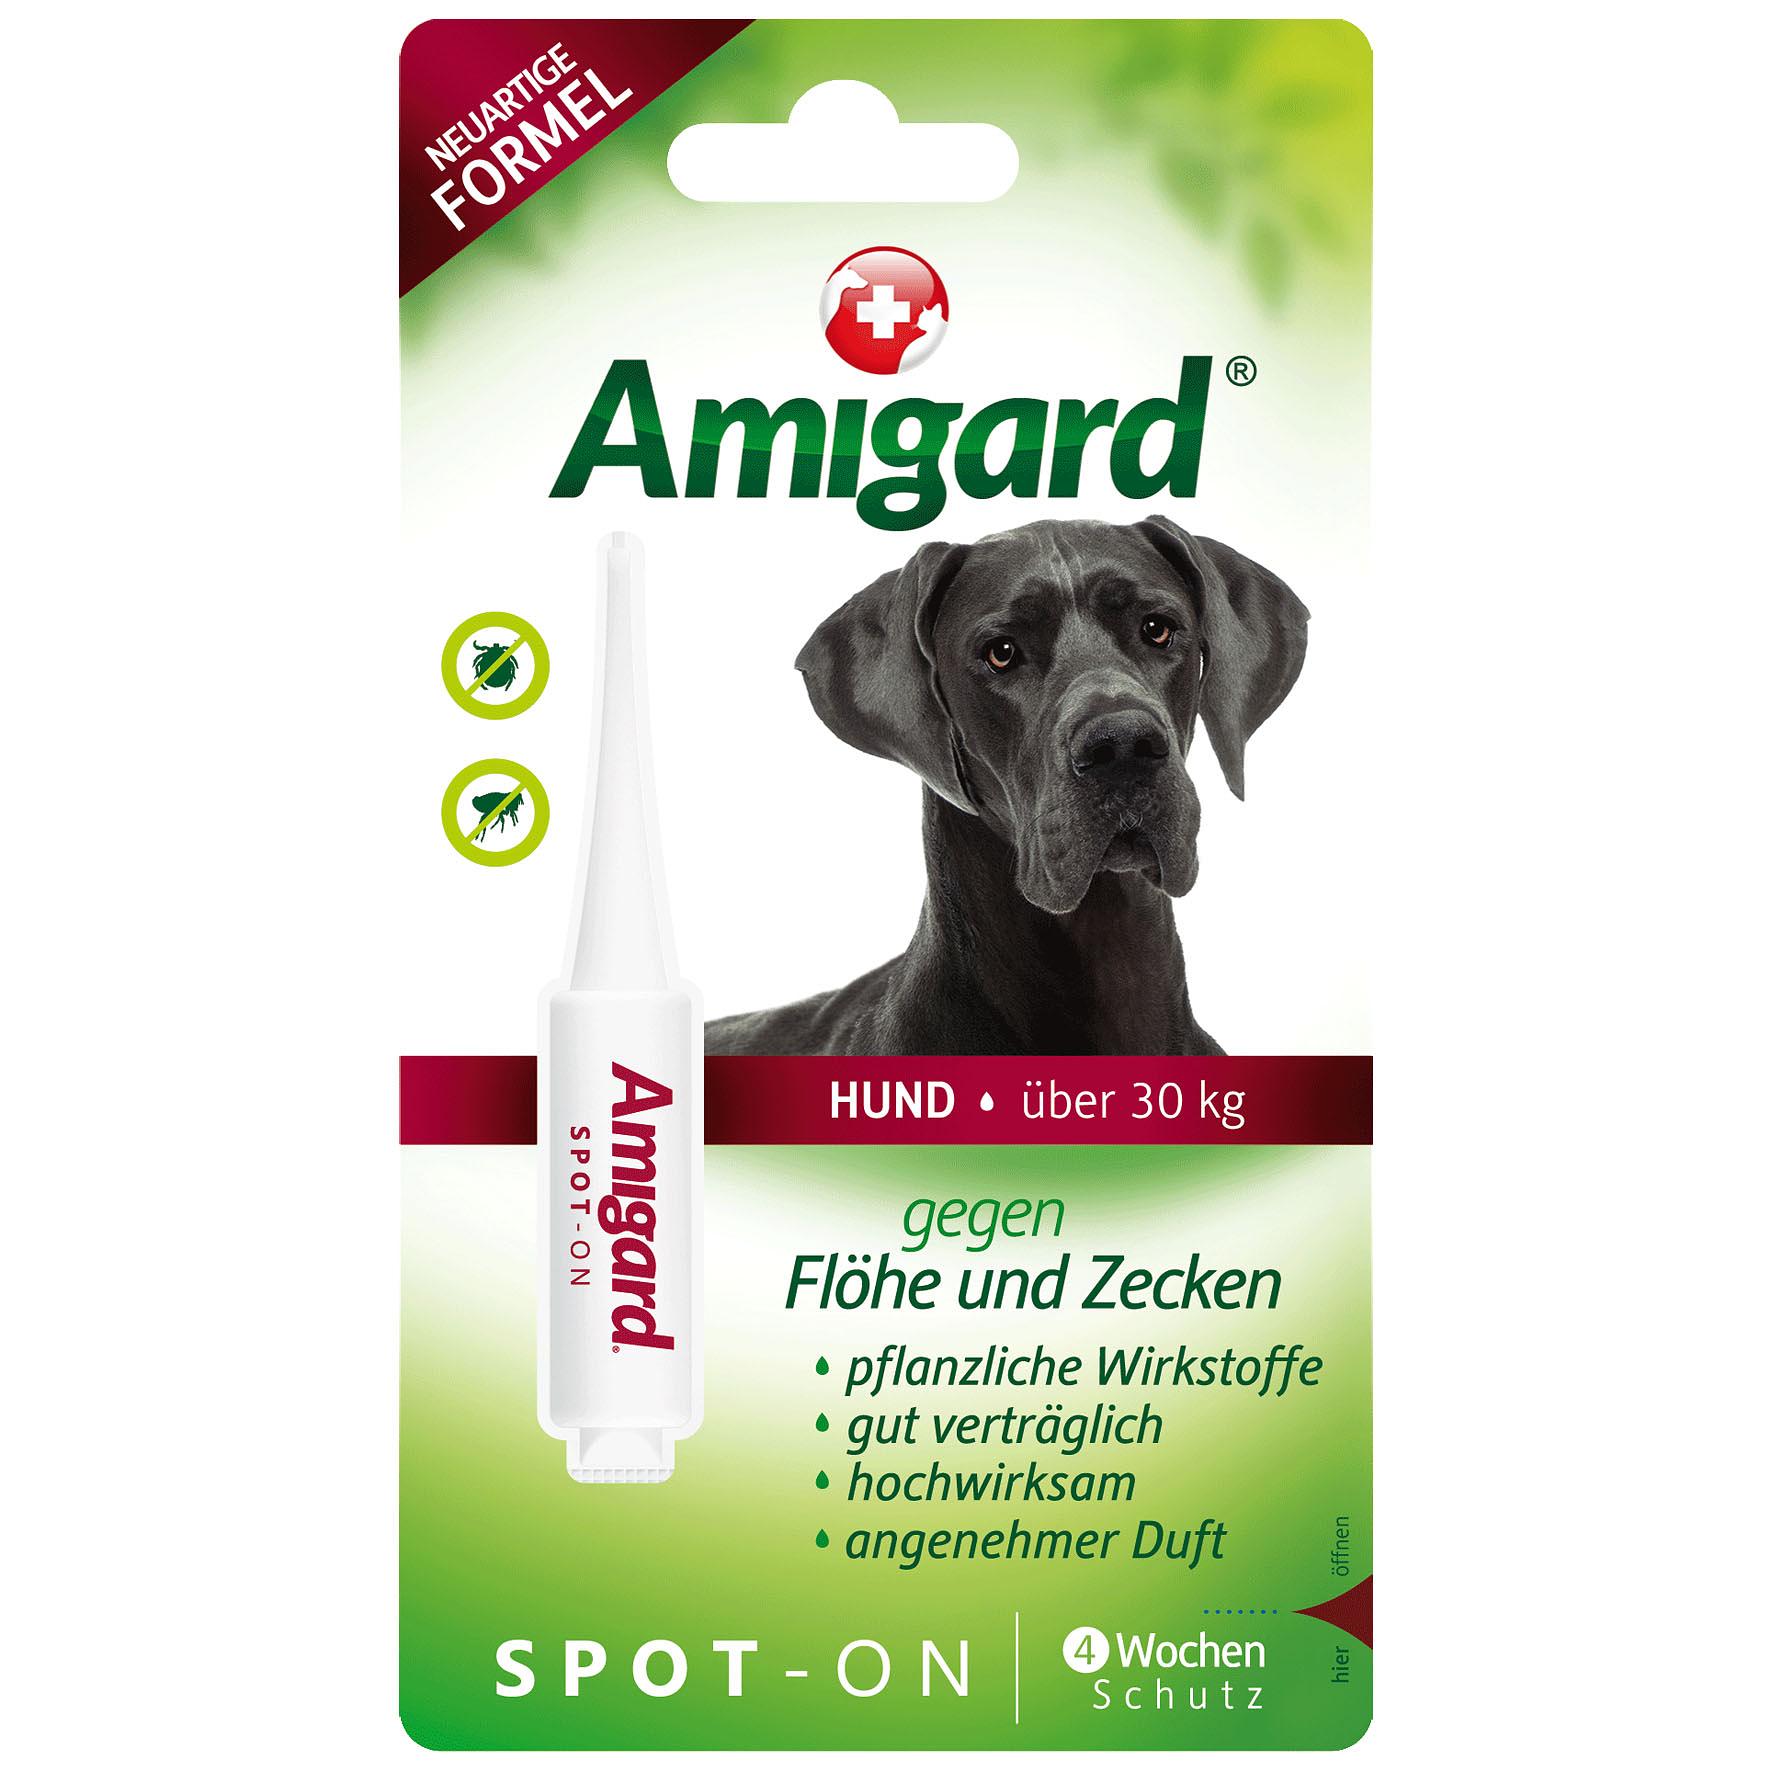 Amigard Spot-on für grosse Hunde